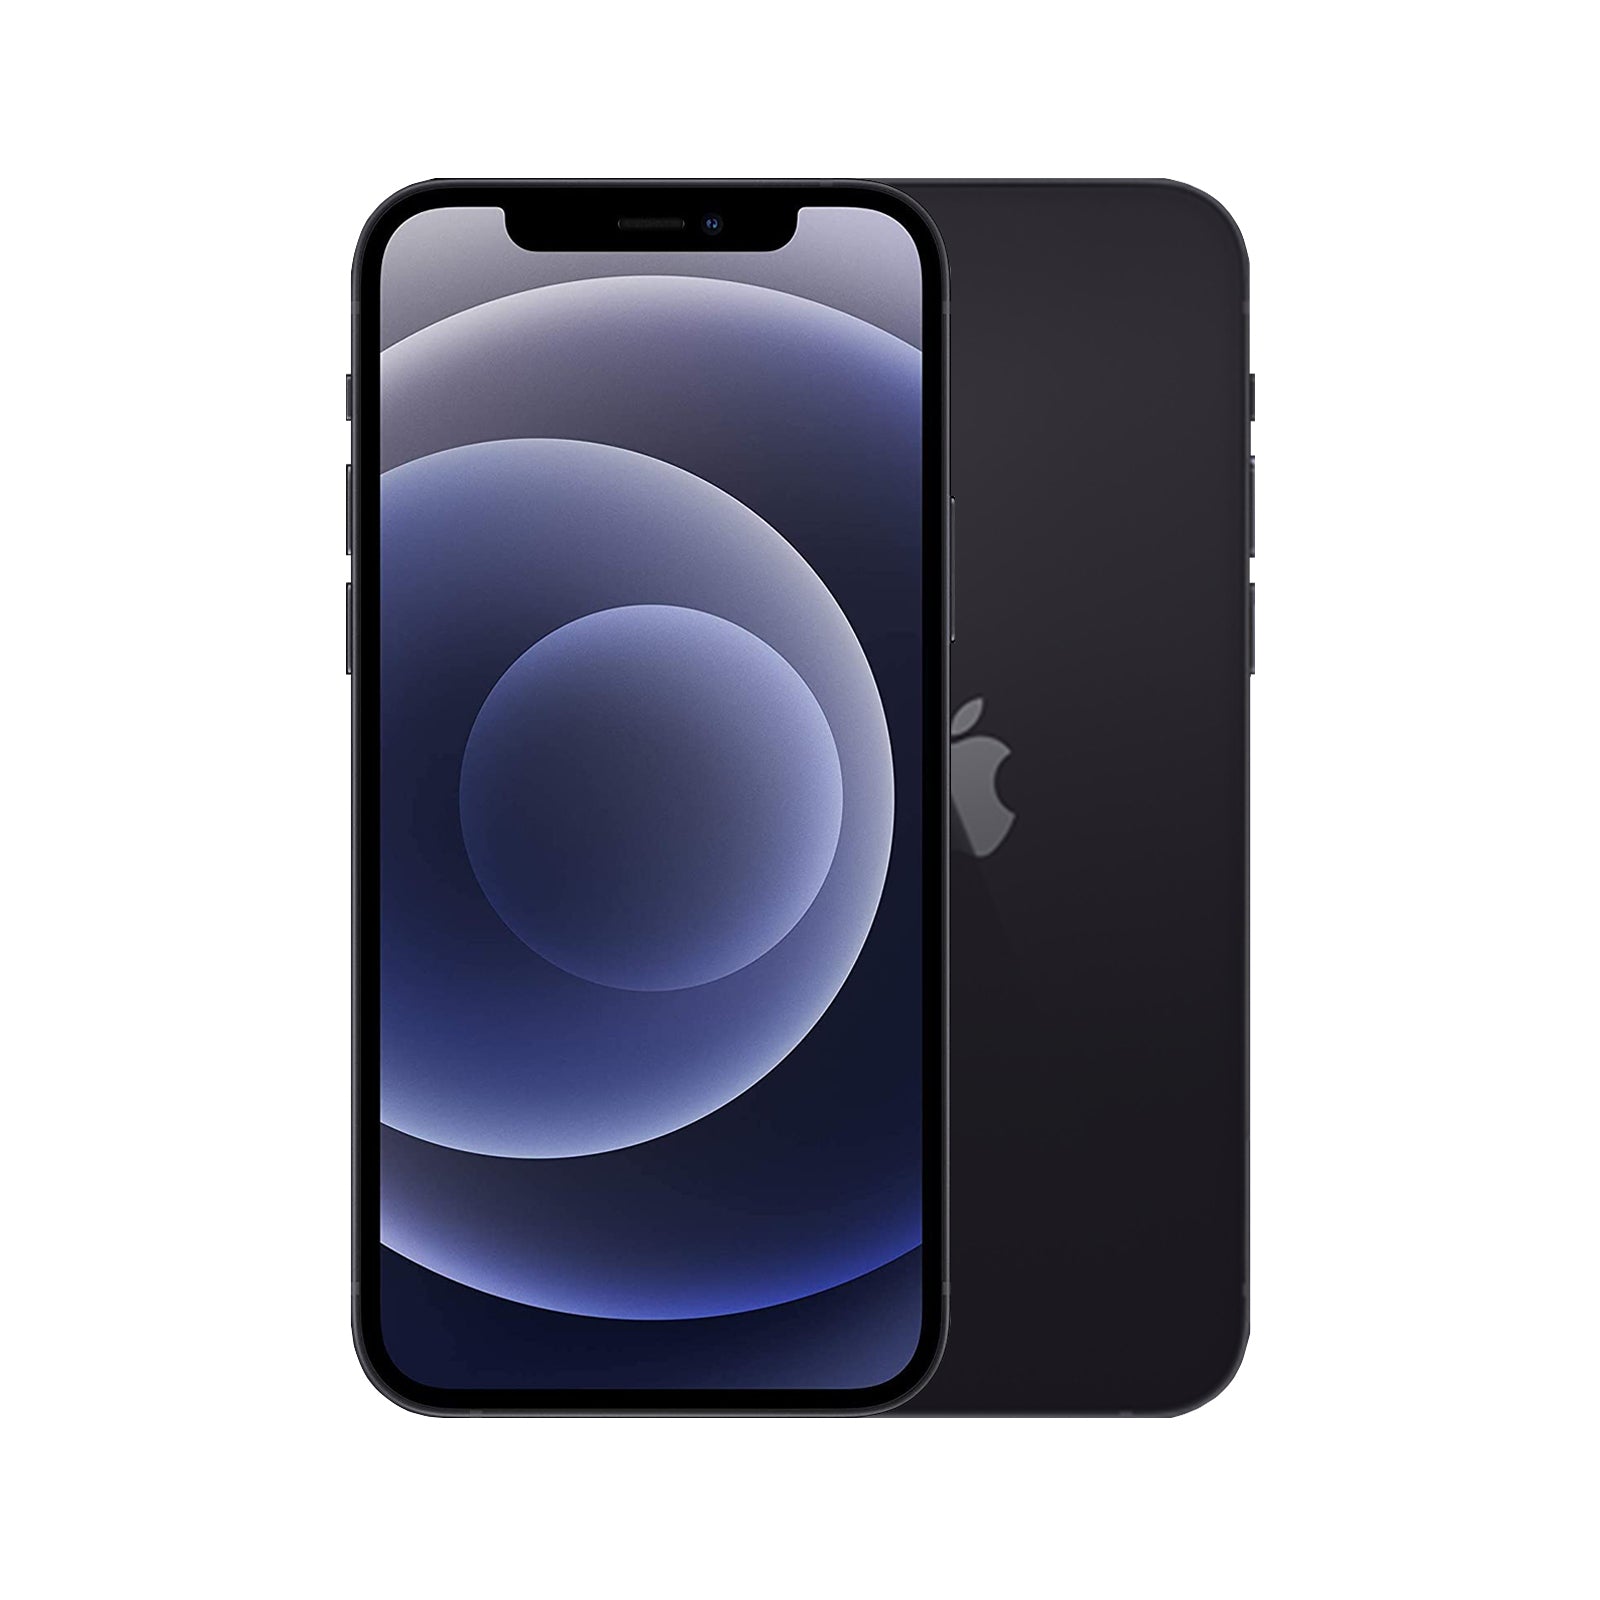 Apple iPhone 12 64GB Black - Good - Refurbished